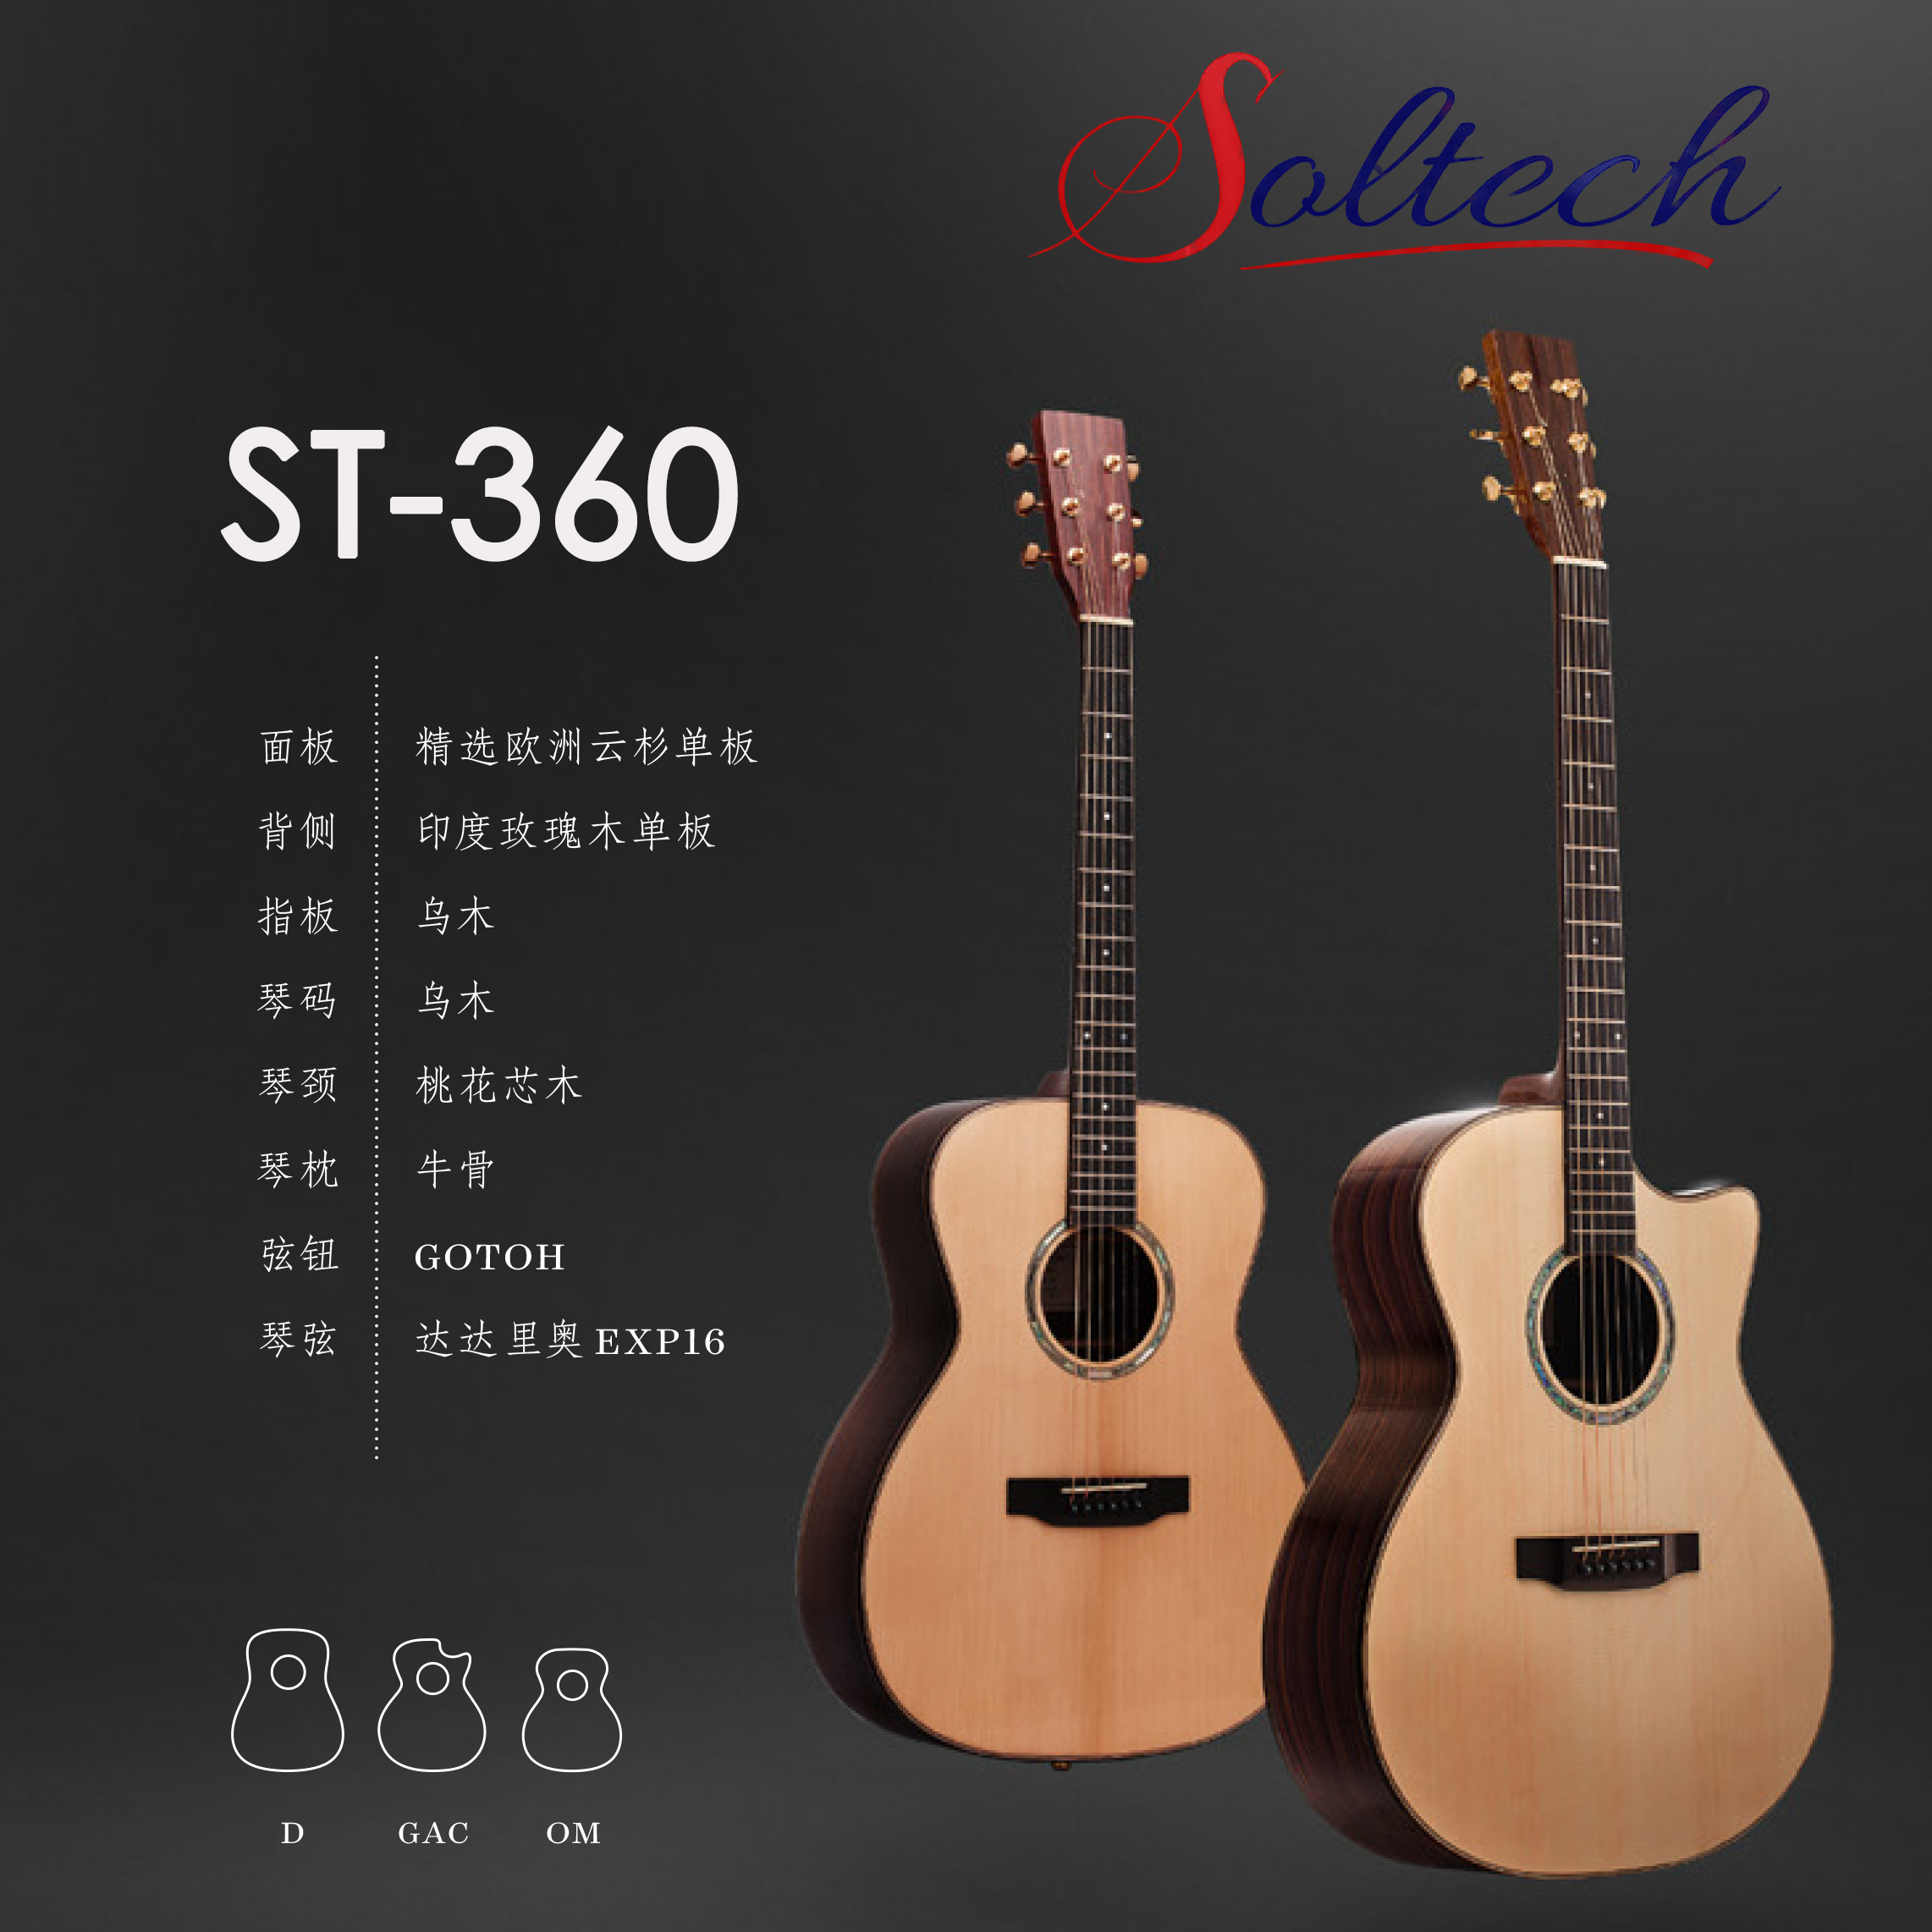 ST-360 acoustic guitar with ebony Fingerboard - Guizhou Soltech 